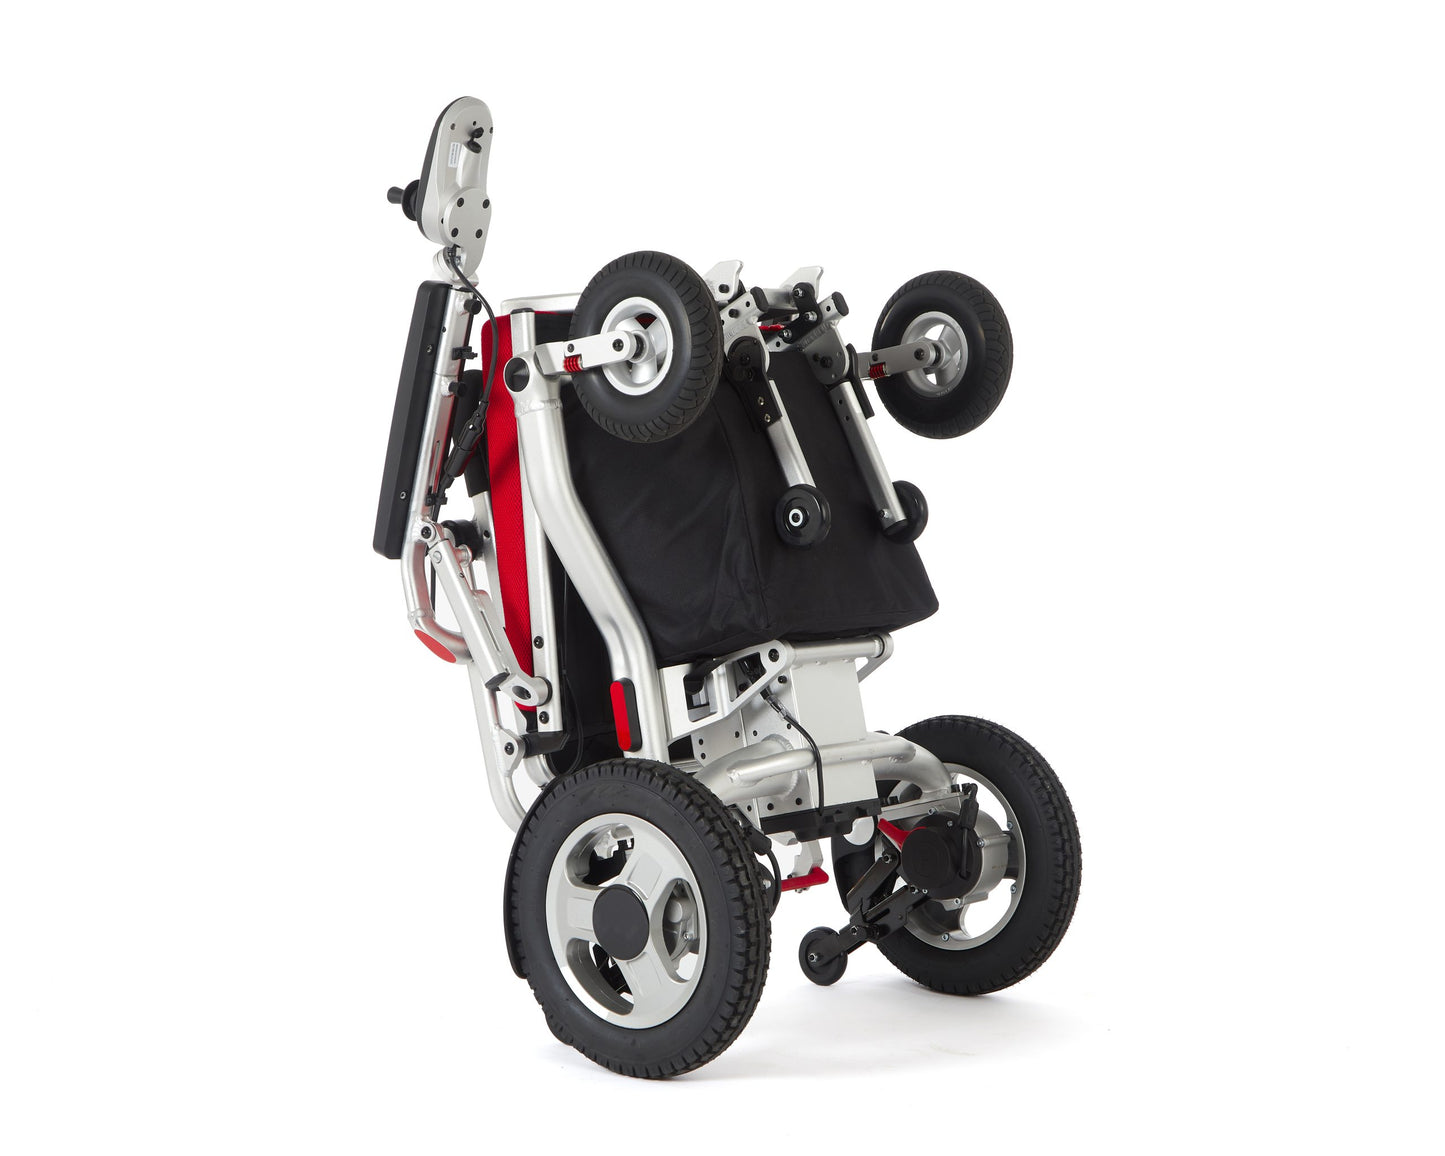 Motion Healthcare Aerolite Trekker Electric Wheelchair - 18 Mile Range!